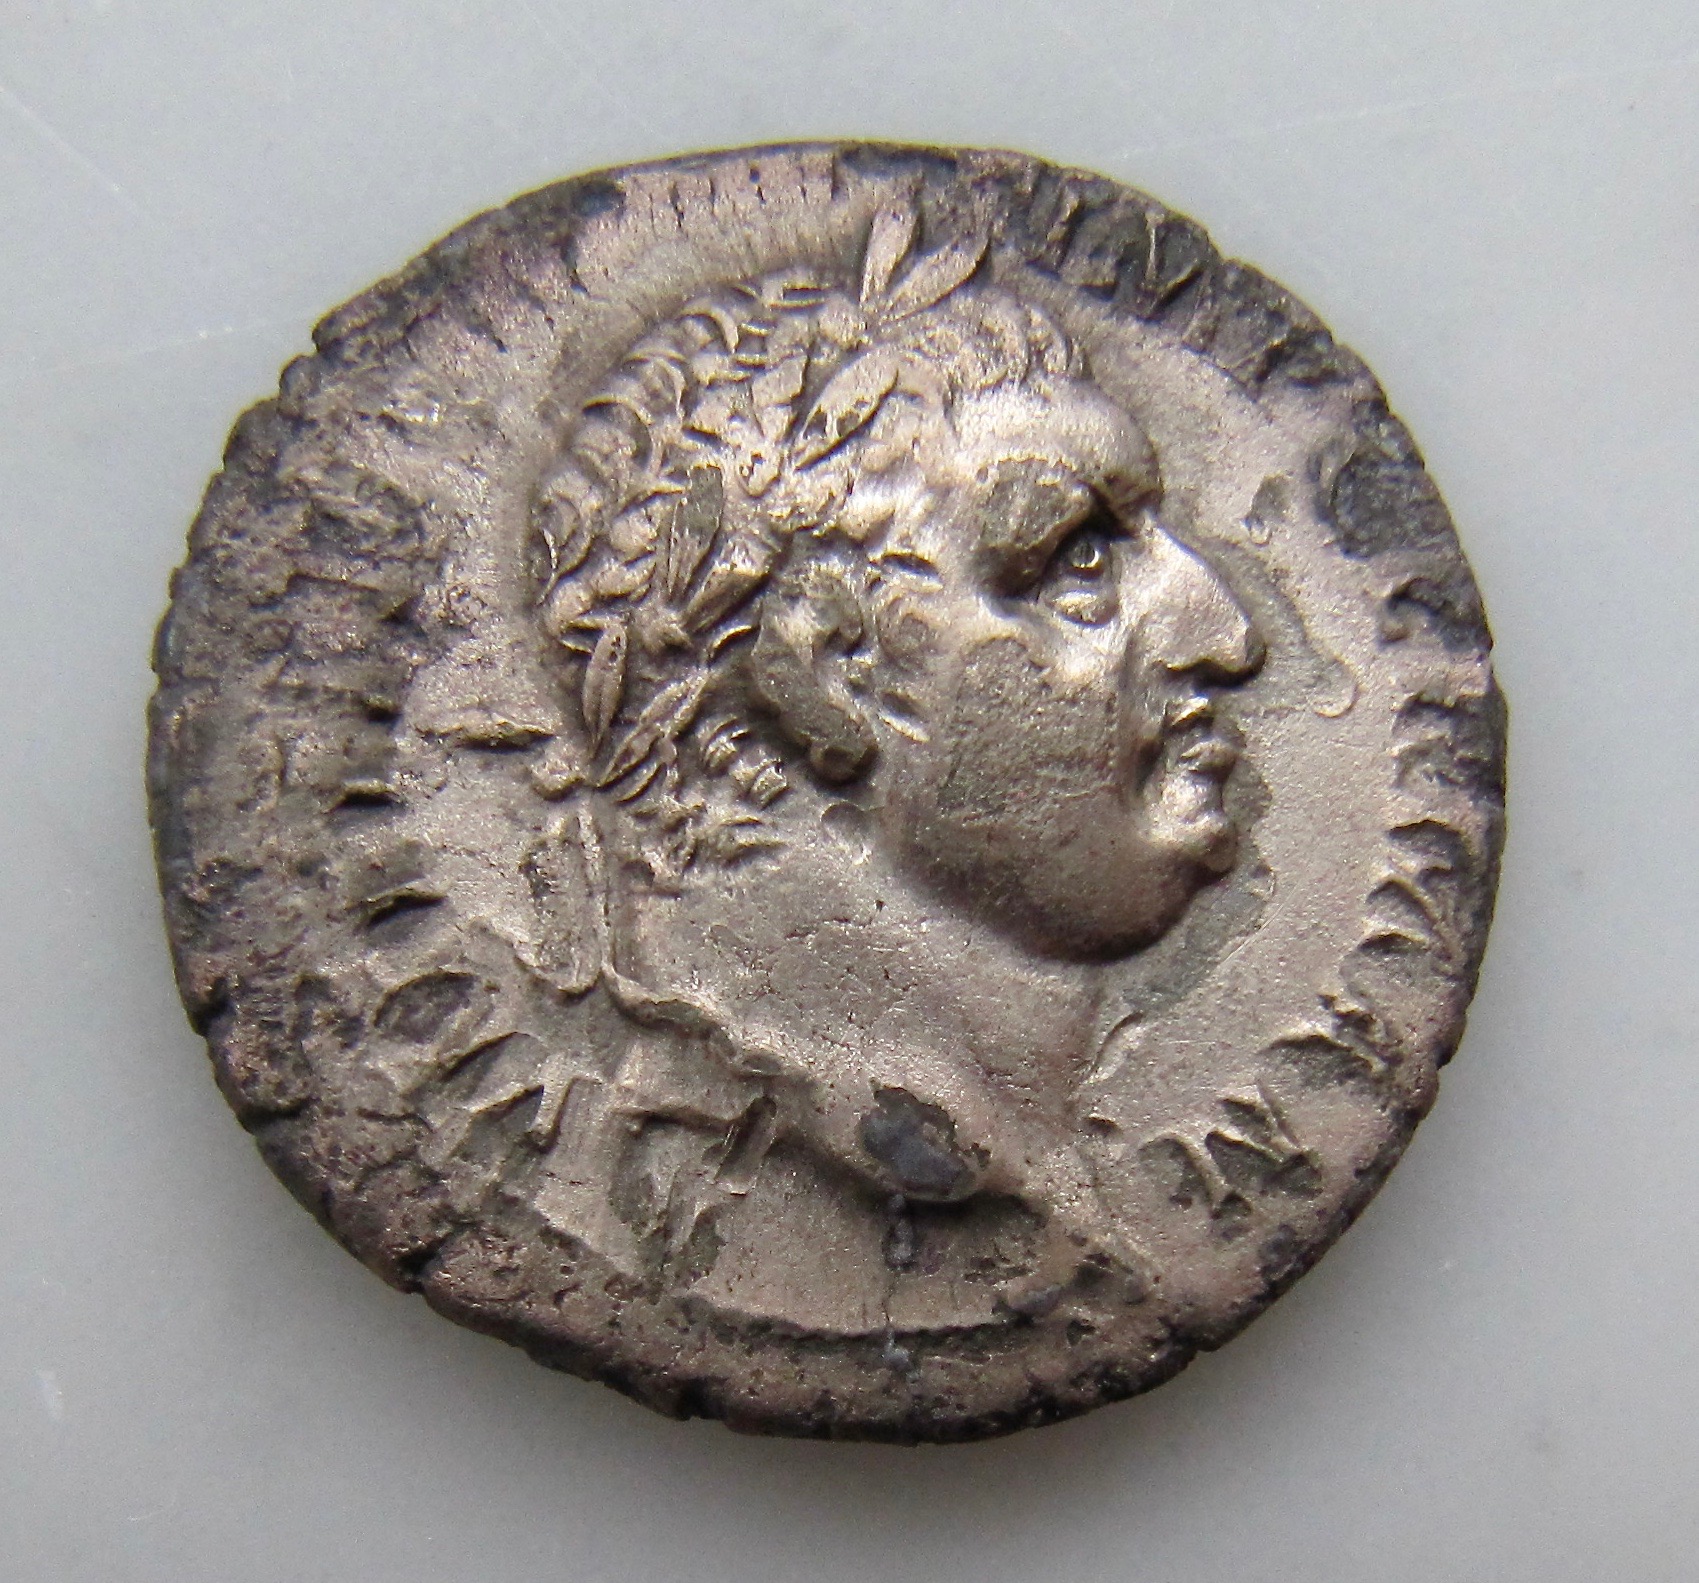 Vitellius portrait | Coin Talk